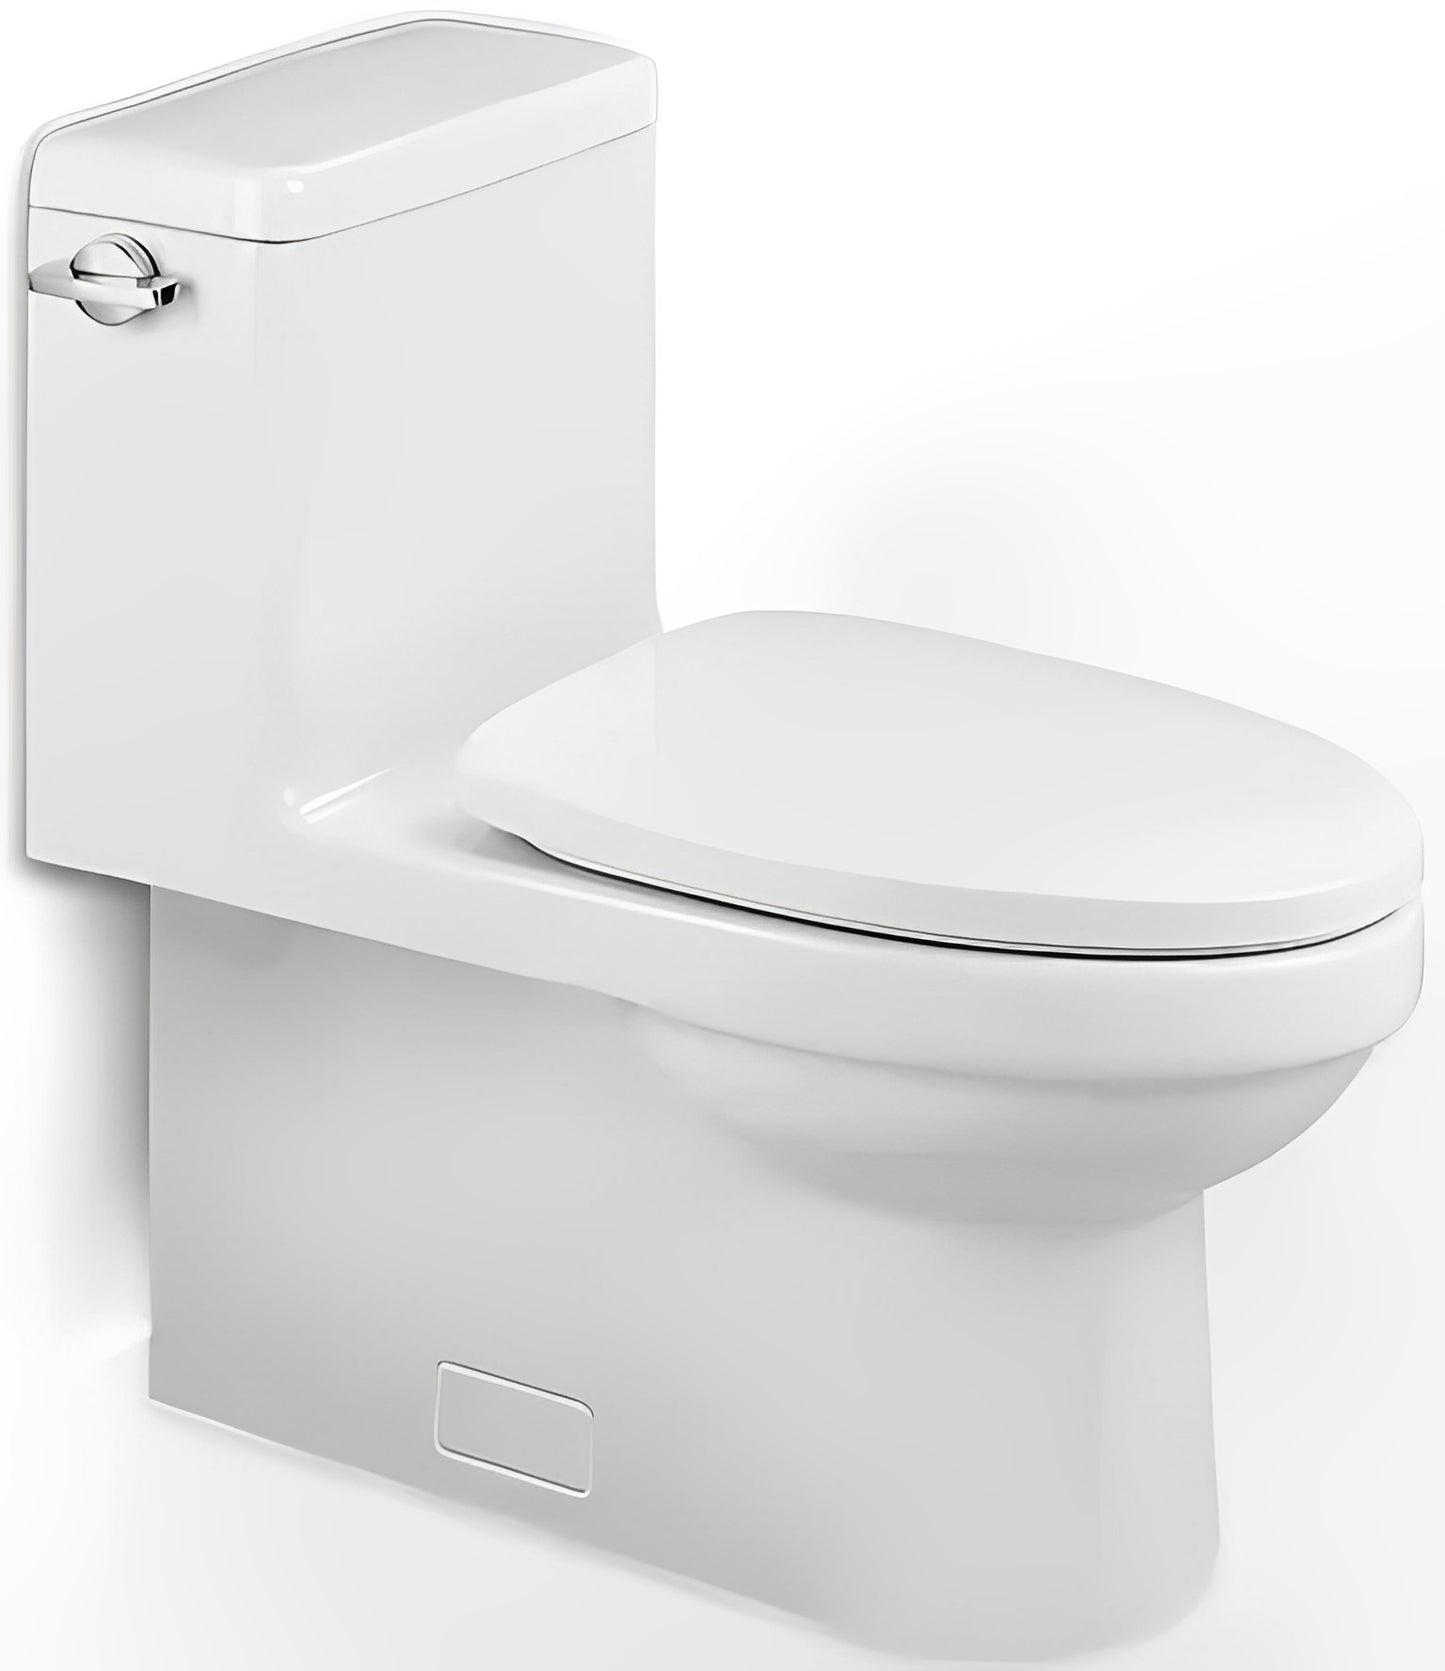 Toilette allongée monobloc Villeroy &amp; Boch Architectura - Blanc Alpin 5697UW01